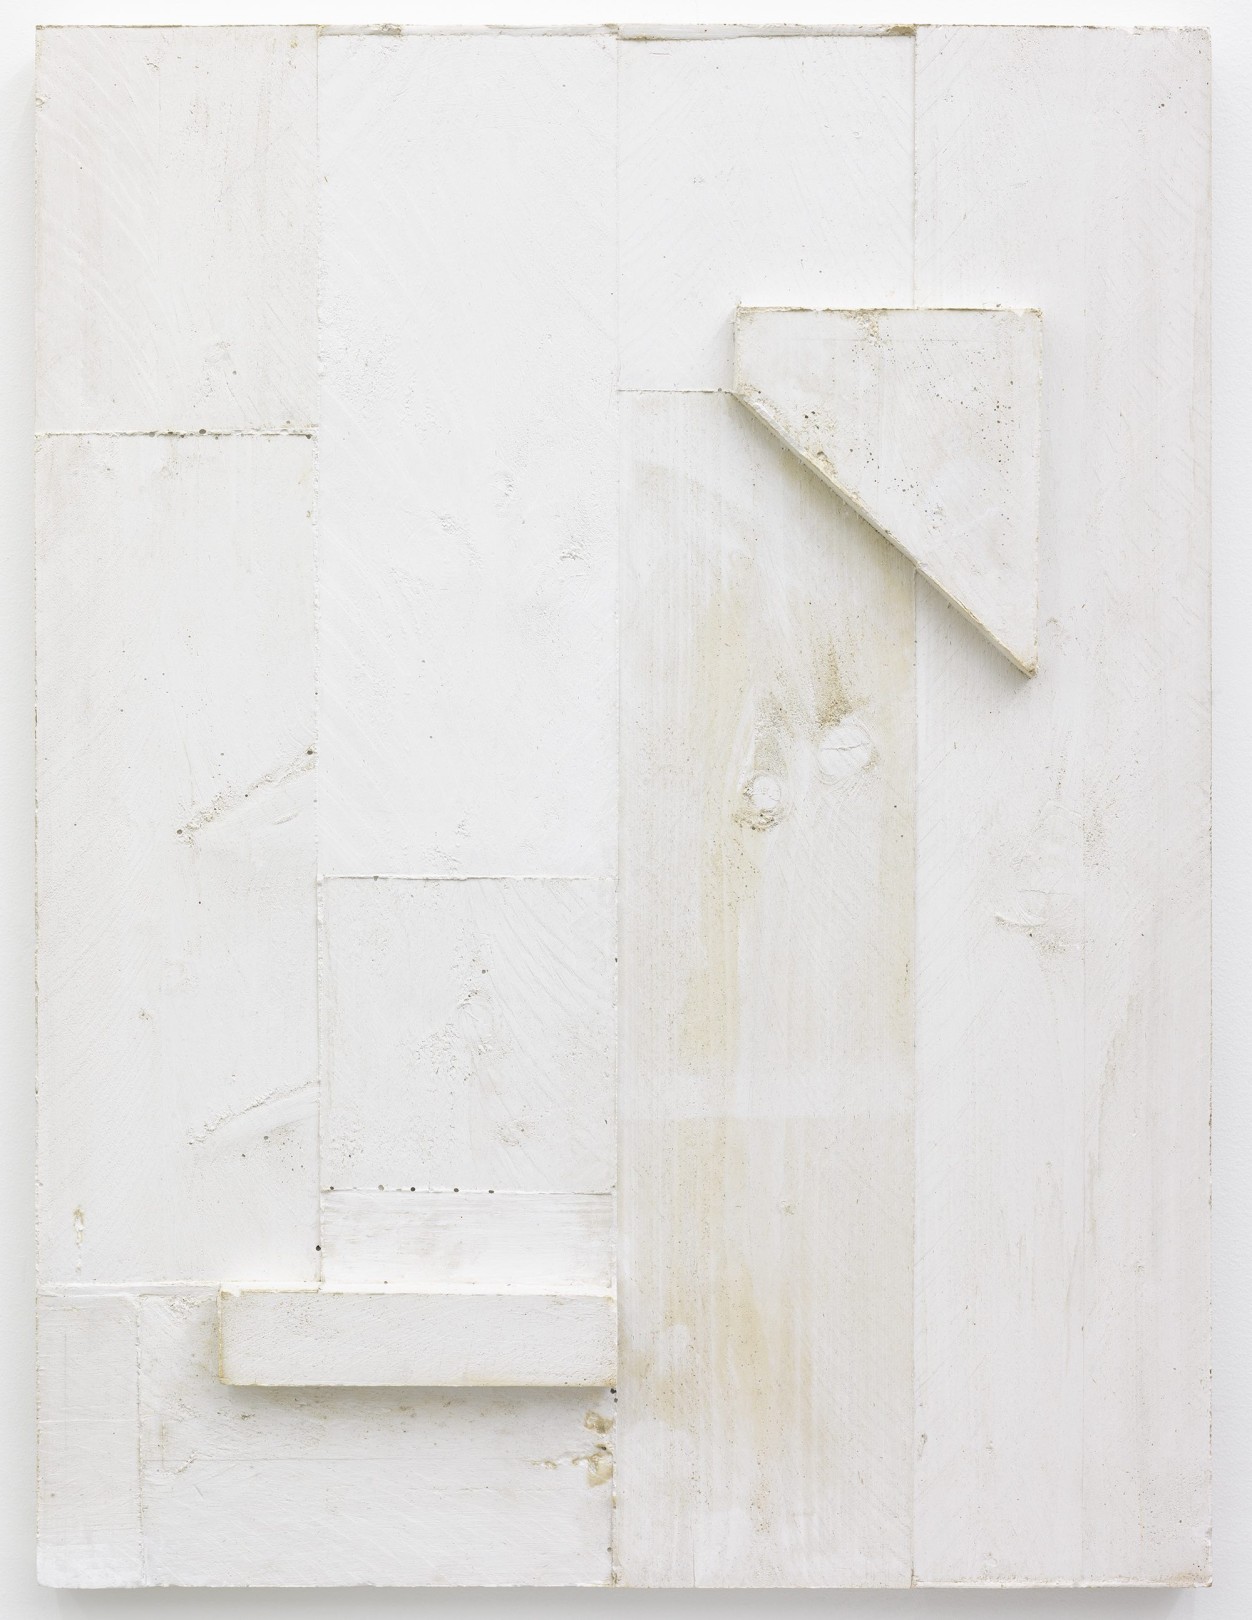 Eva Berendes, Untitled, 2013-2014